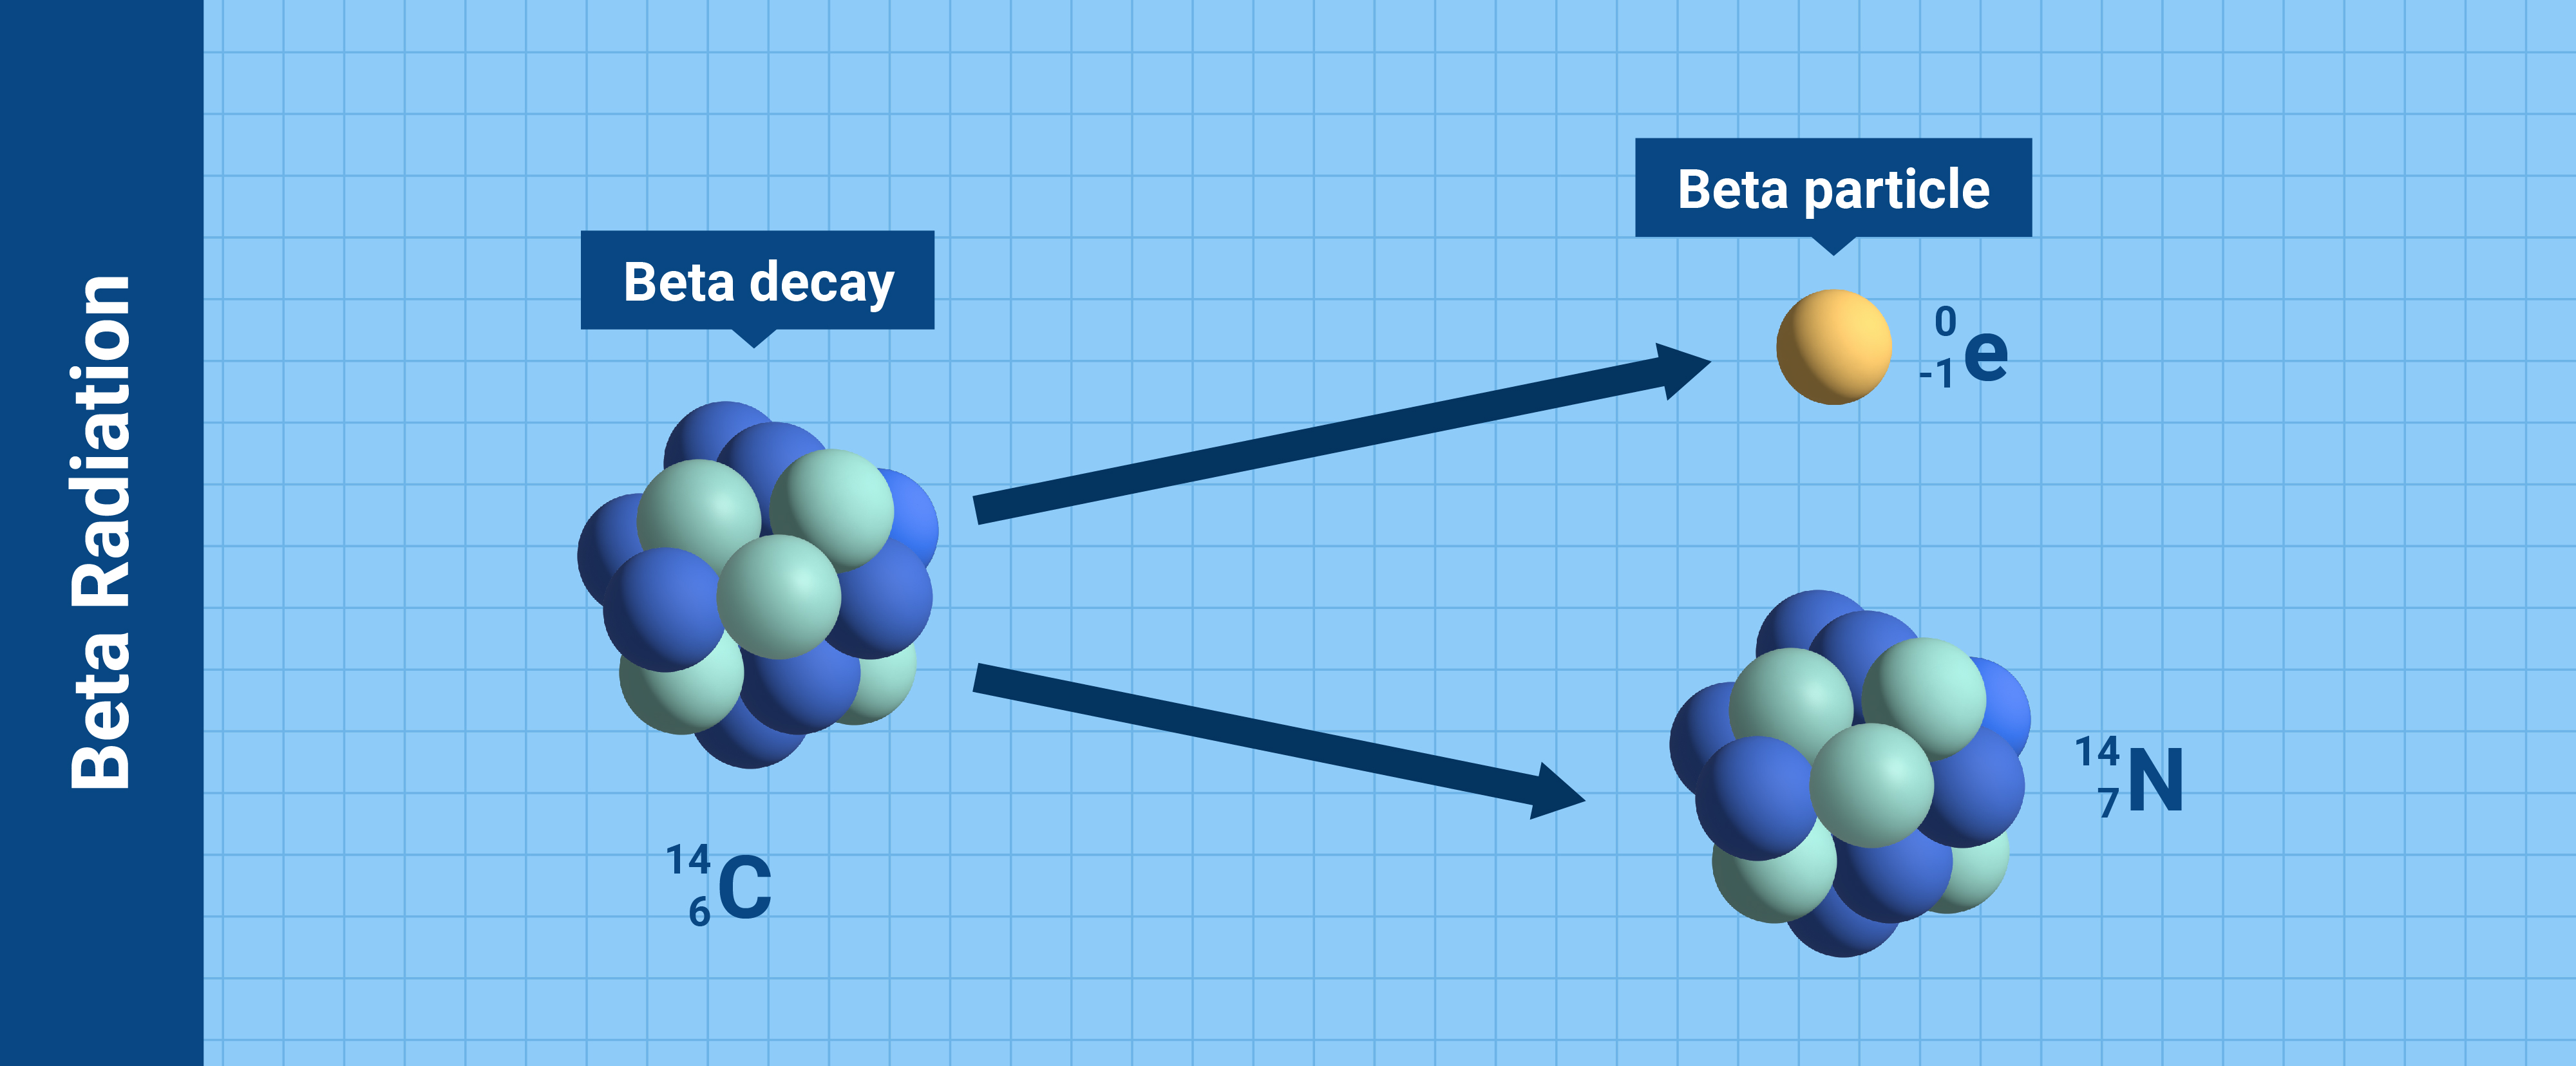 beta particles